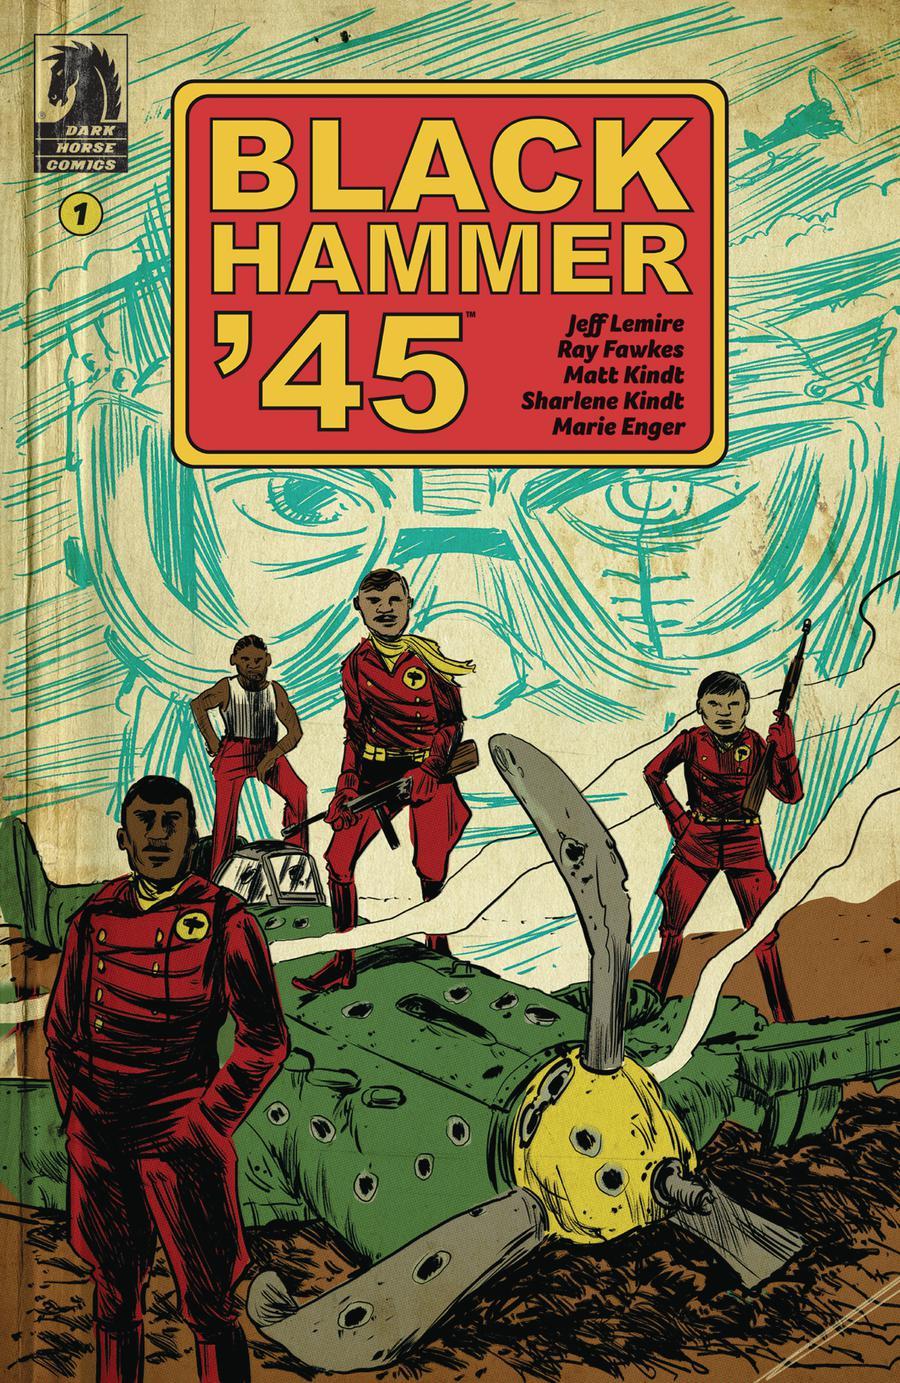 Black Hammer 45 From The World Of Black Hammer Vol. 1 #1